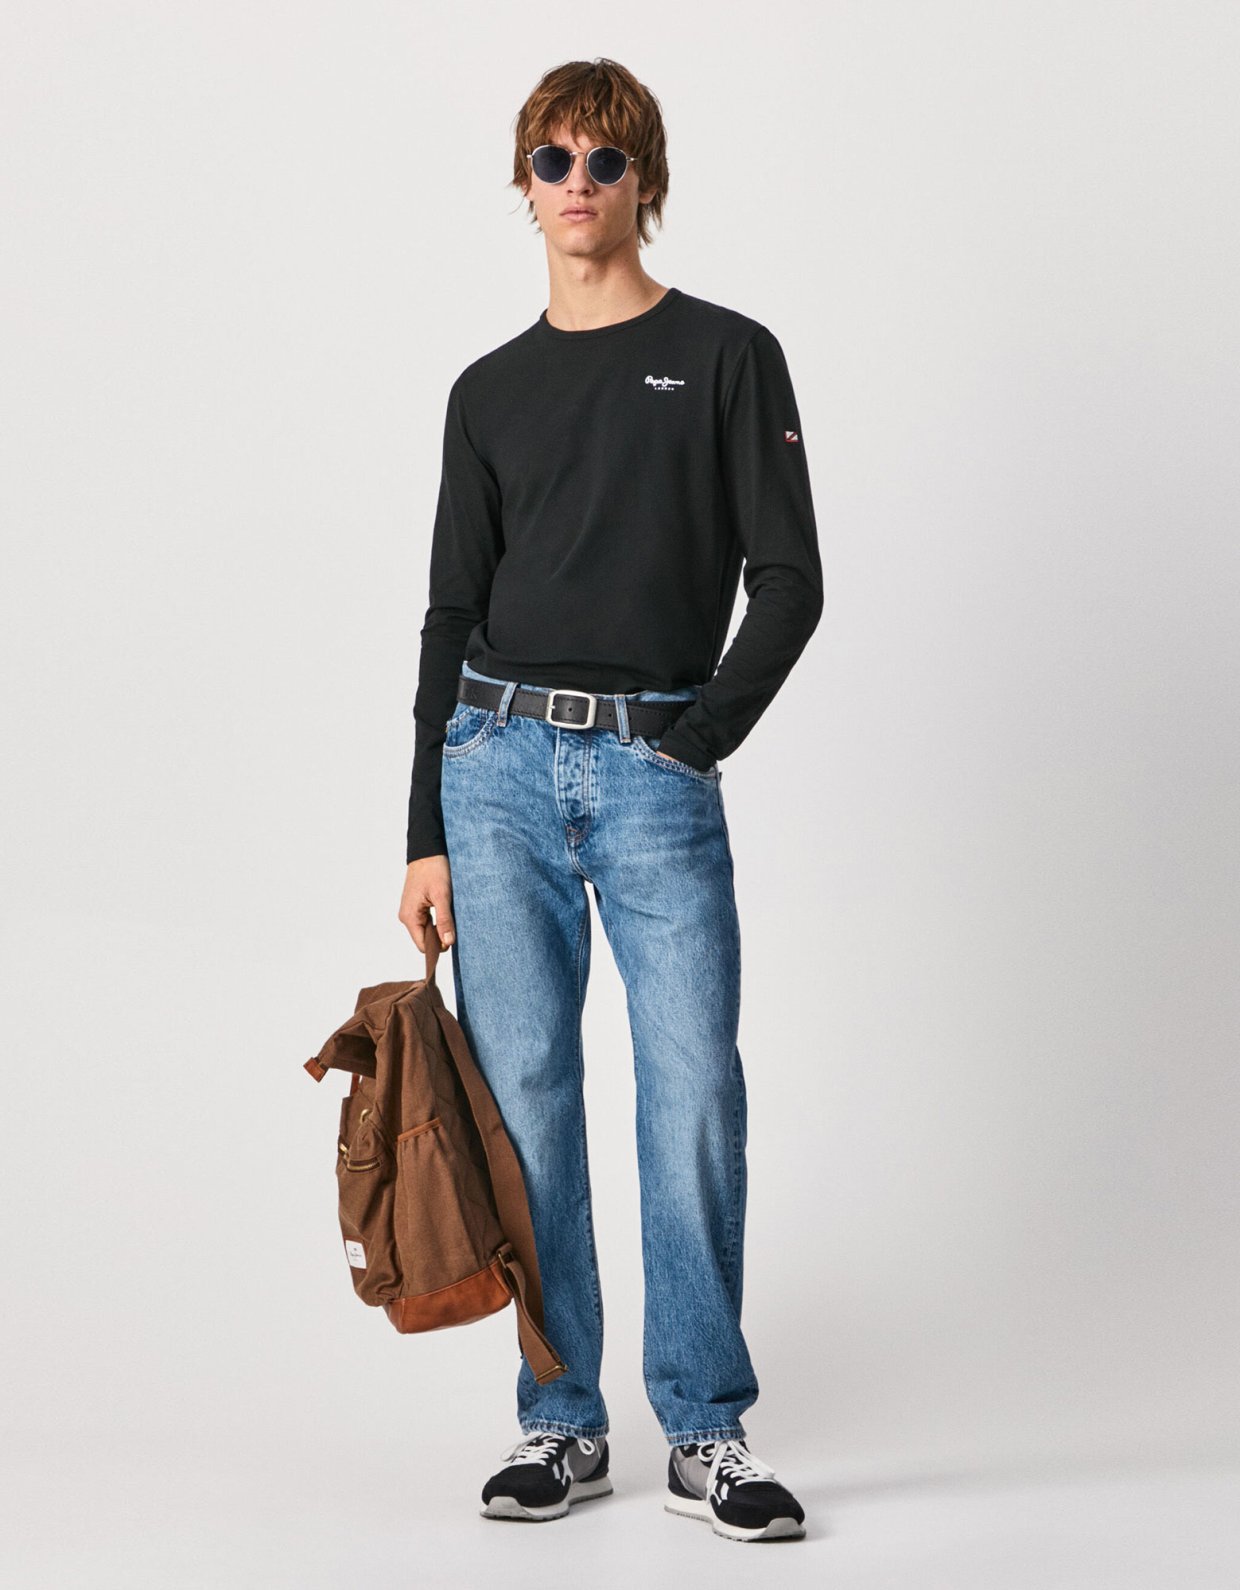 Pepe Jeans Original basic long-sleeved basic t-shirt black